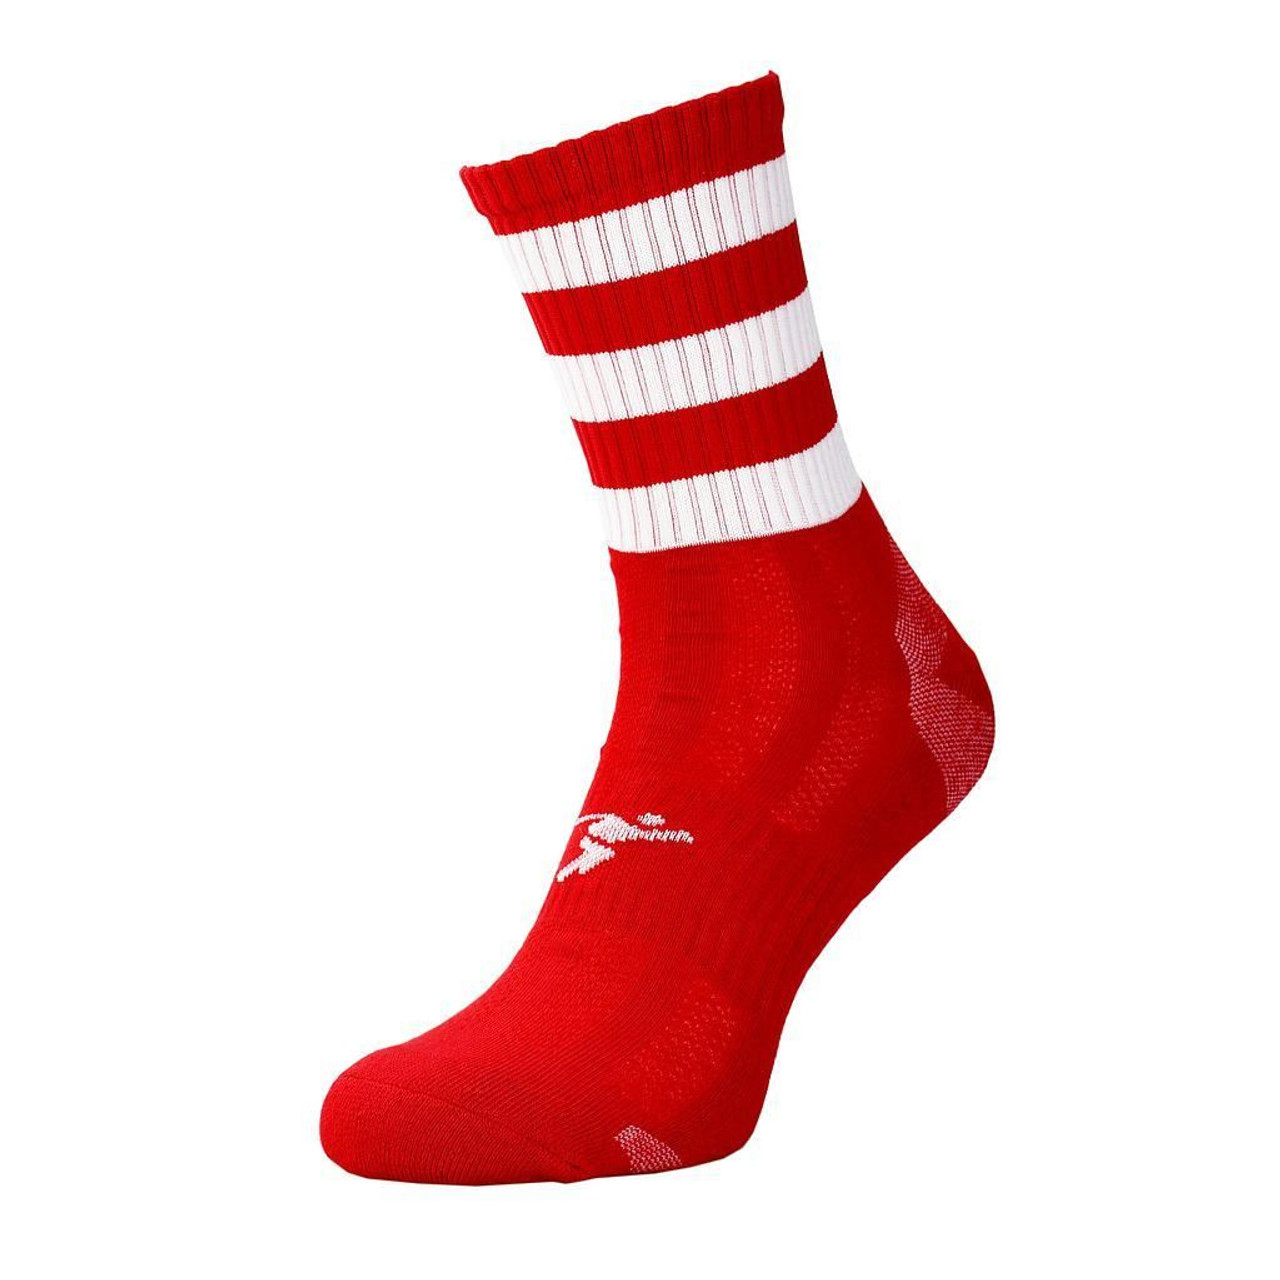 Murphy's Pro Mid GAA Grip Socks Junior Red/White 3-5